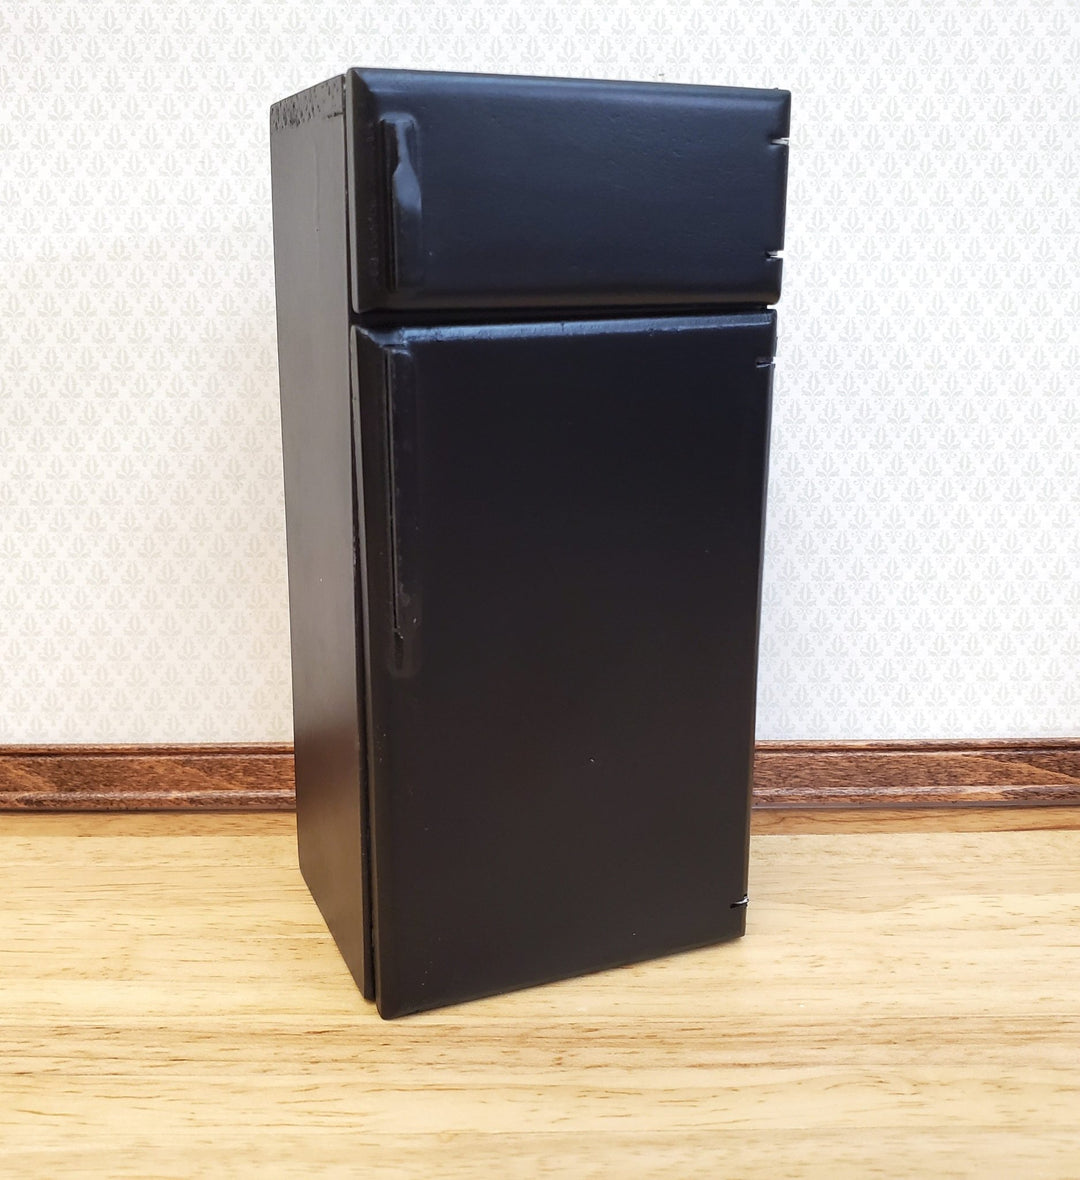 Dollhouse Fridge Modern Refrigerator Freezer Black 2 Door 1:12 Scale Miniature - Miniature Crush